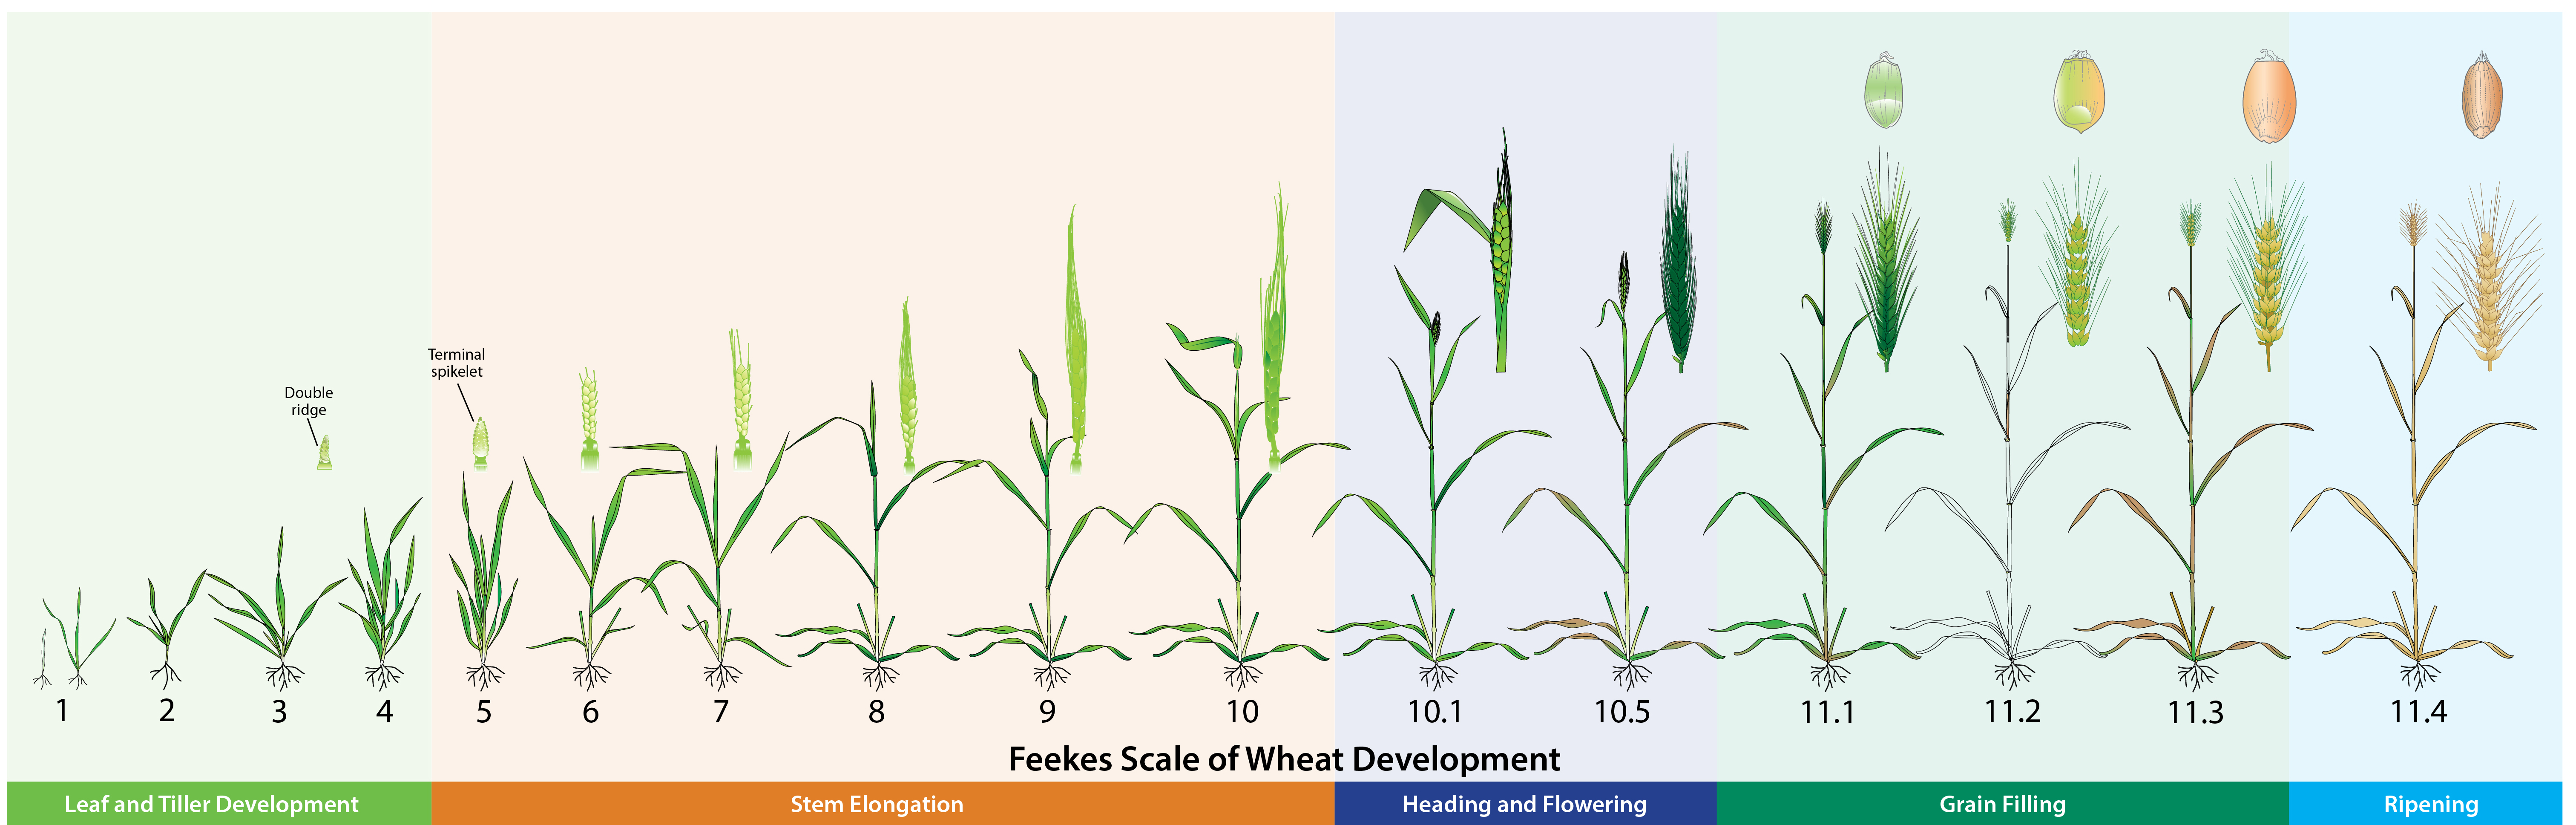 diagram of Feekes scale of wheat development